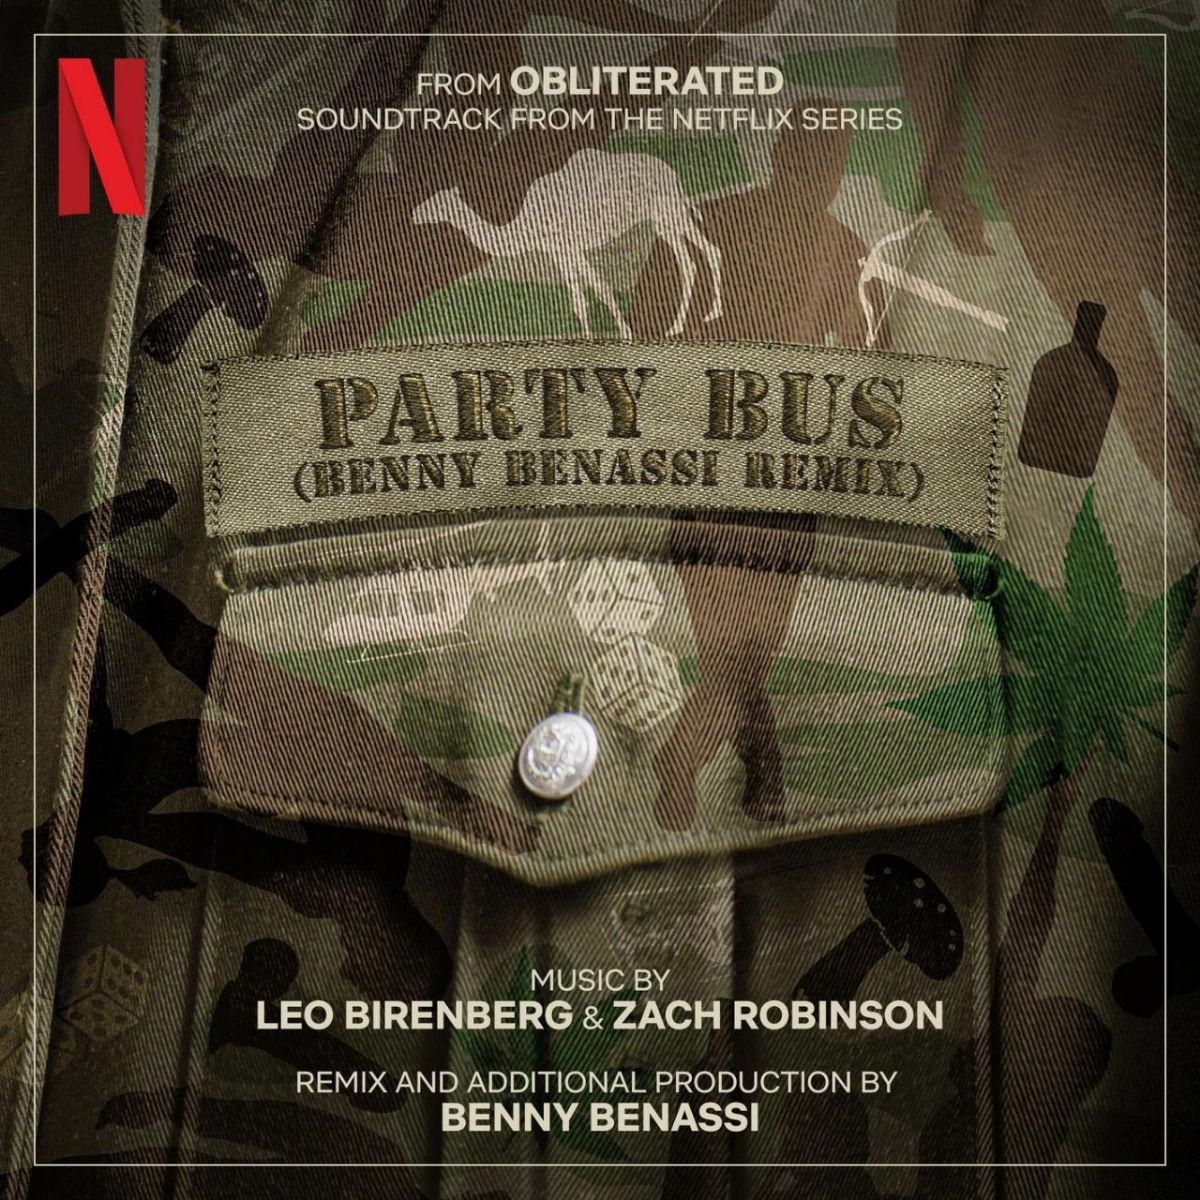 Leo Birenberg & Zach Robinson - Party Bus (Benny Benassi